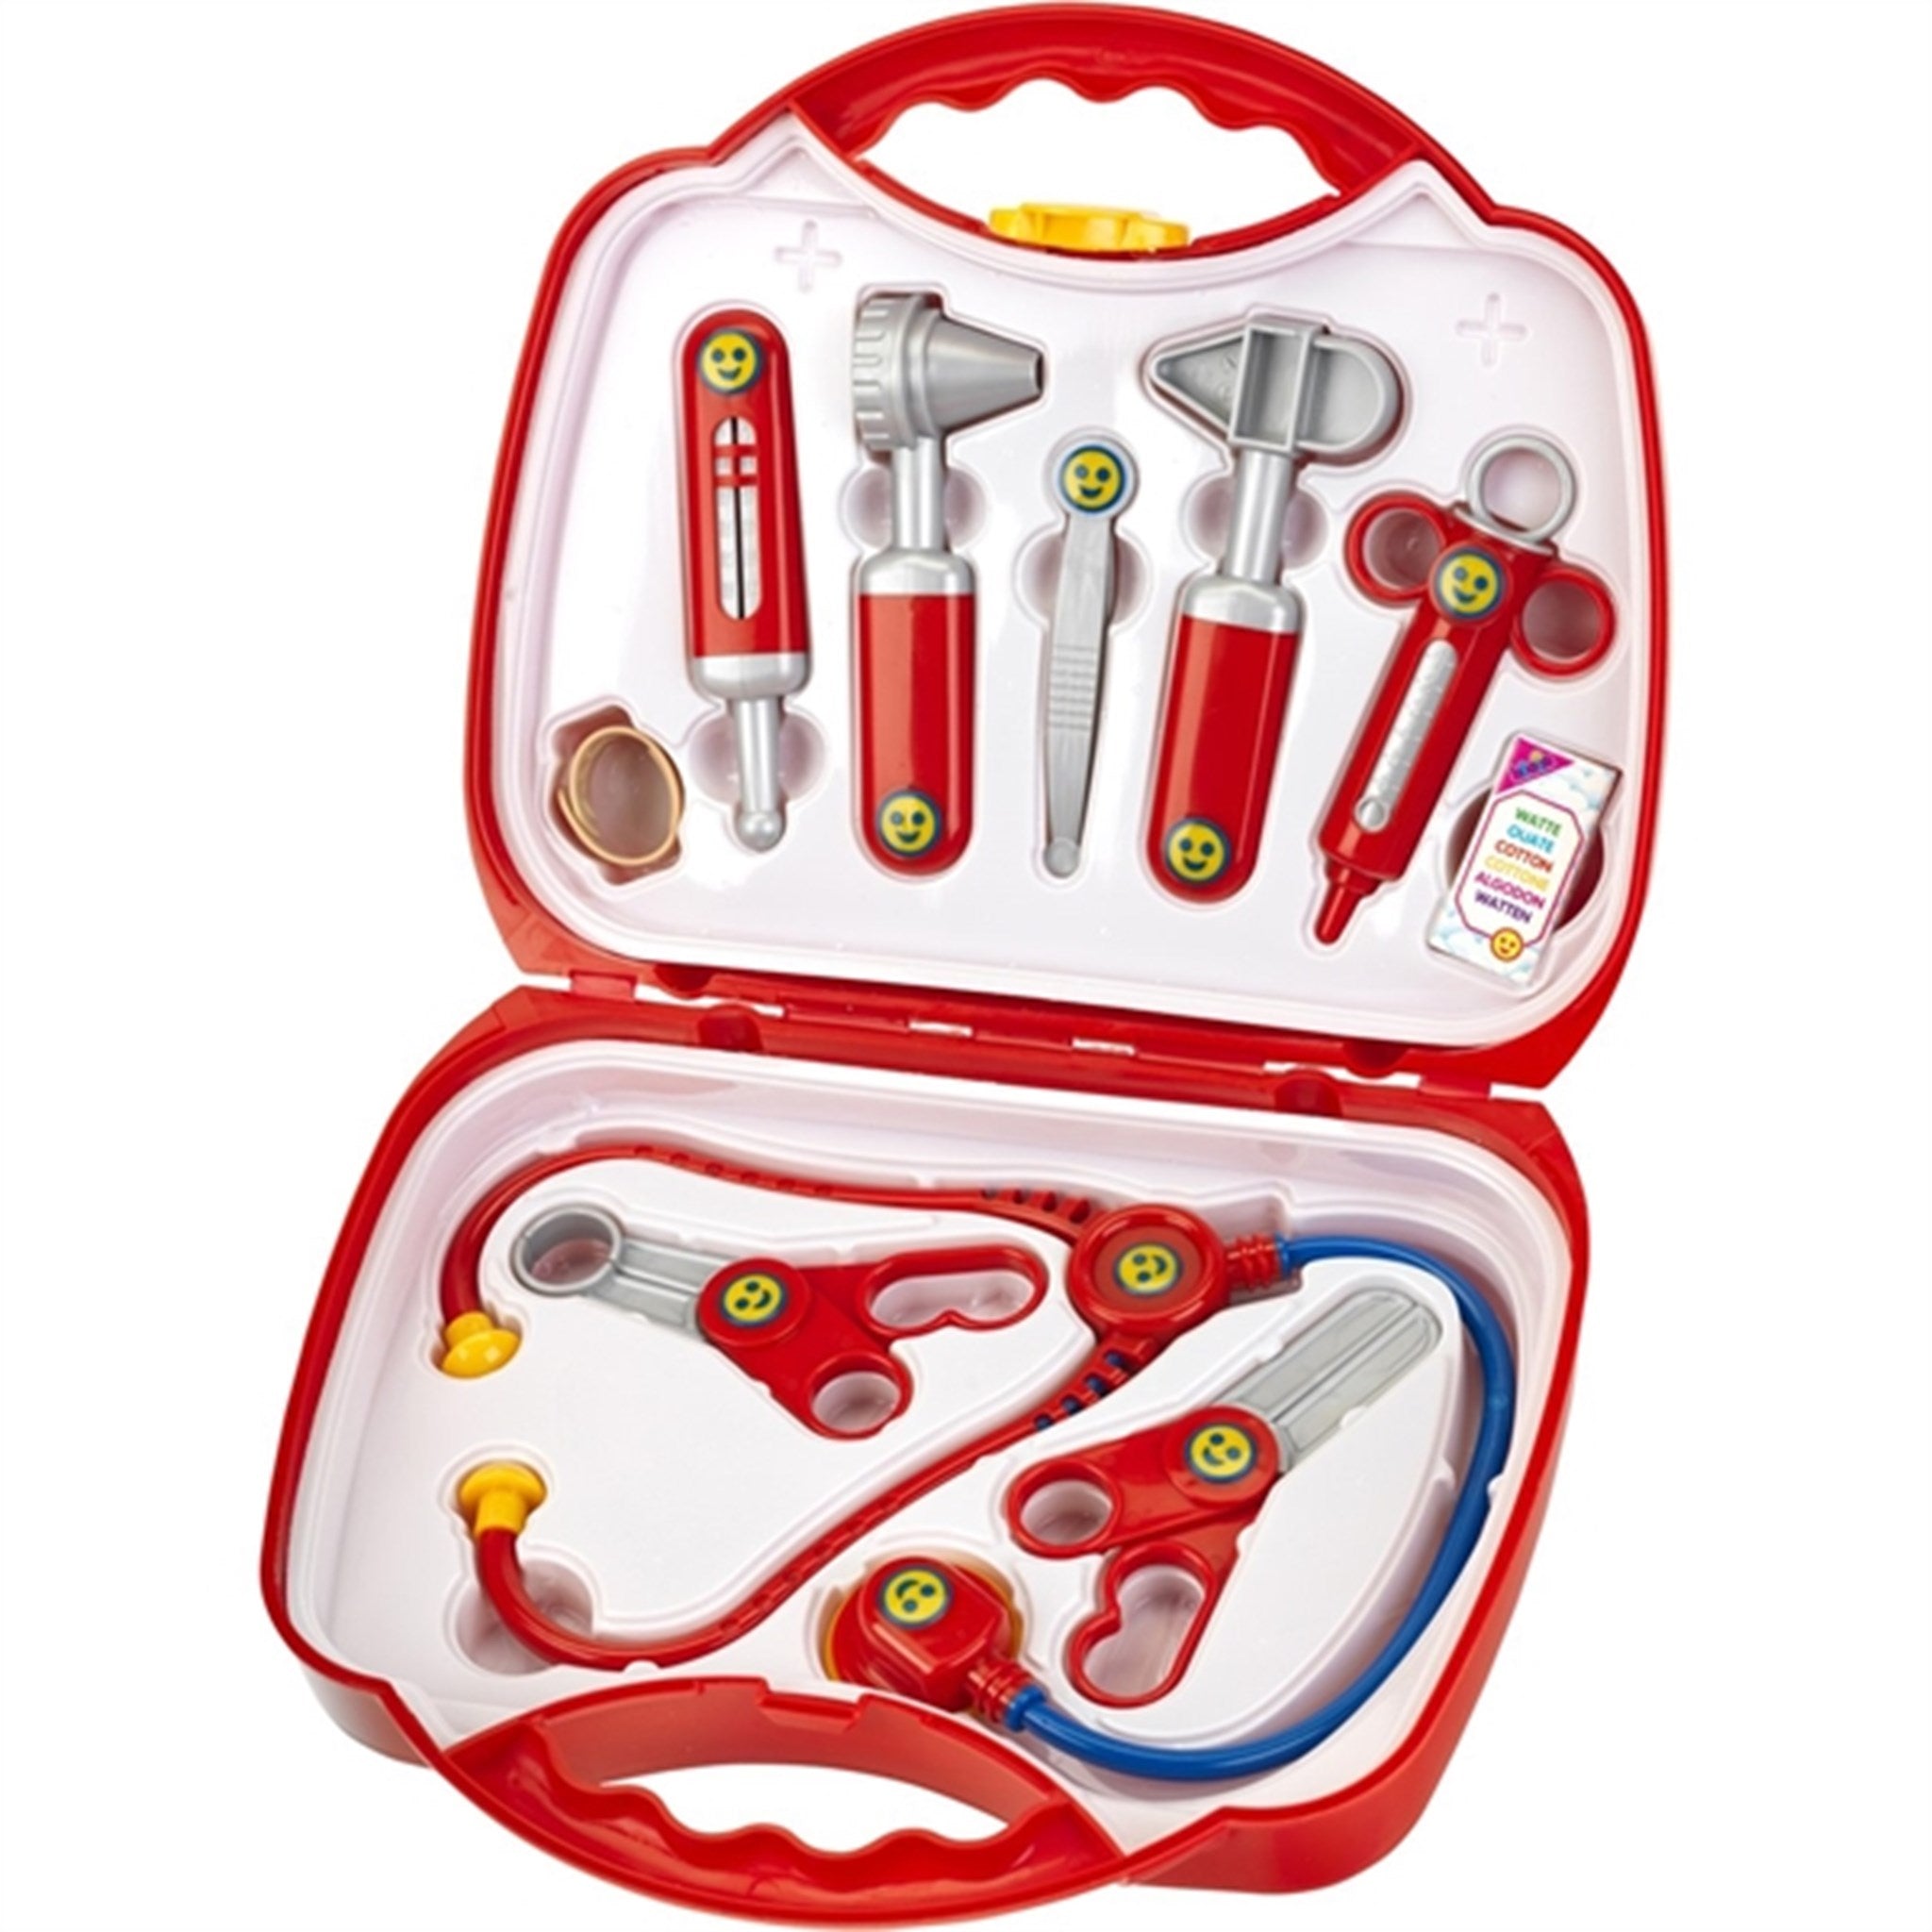 Klein Doctor's kit